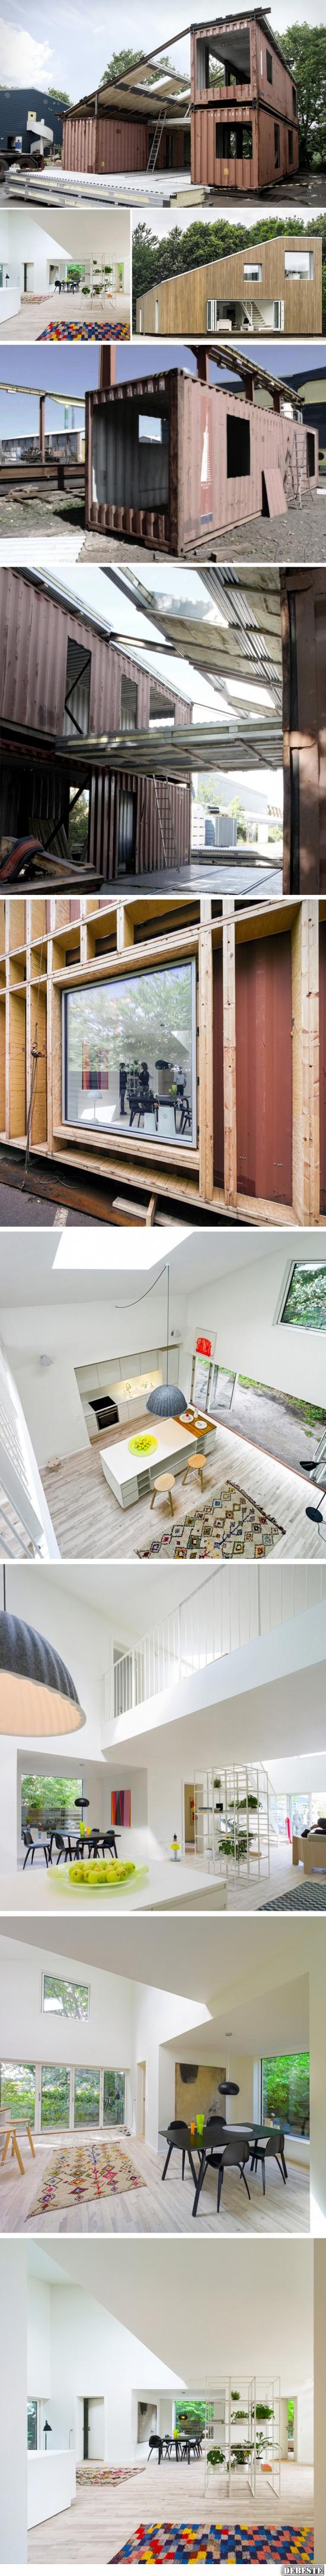 Modernen Container Haus - Lustige Bilder | DEBESTE.de